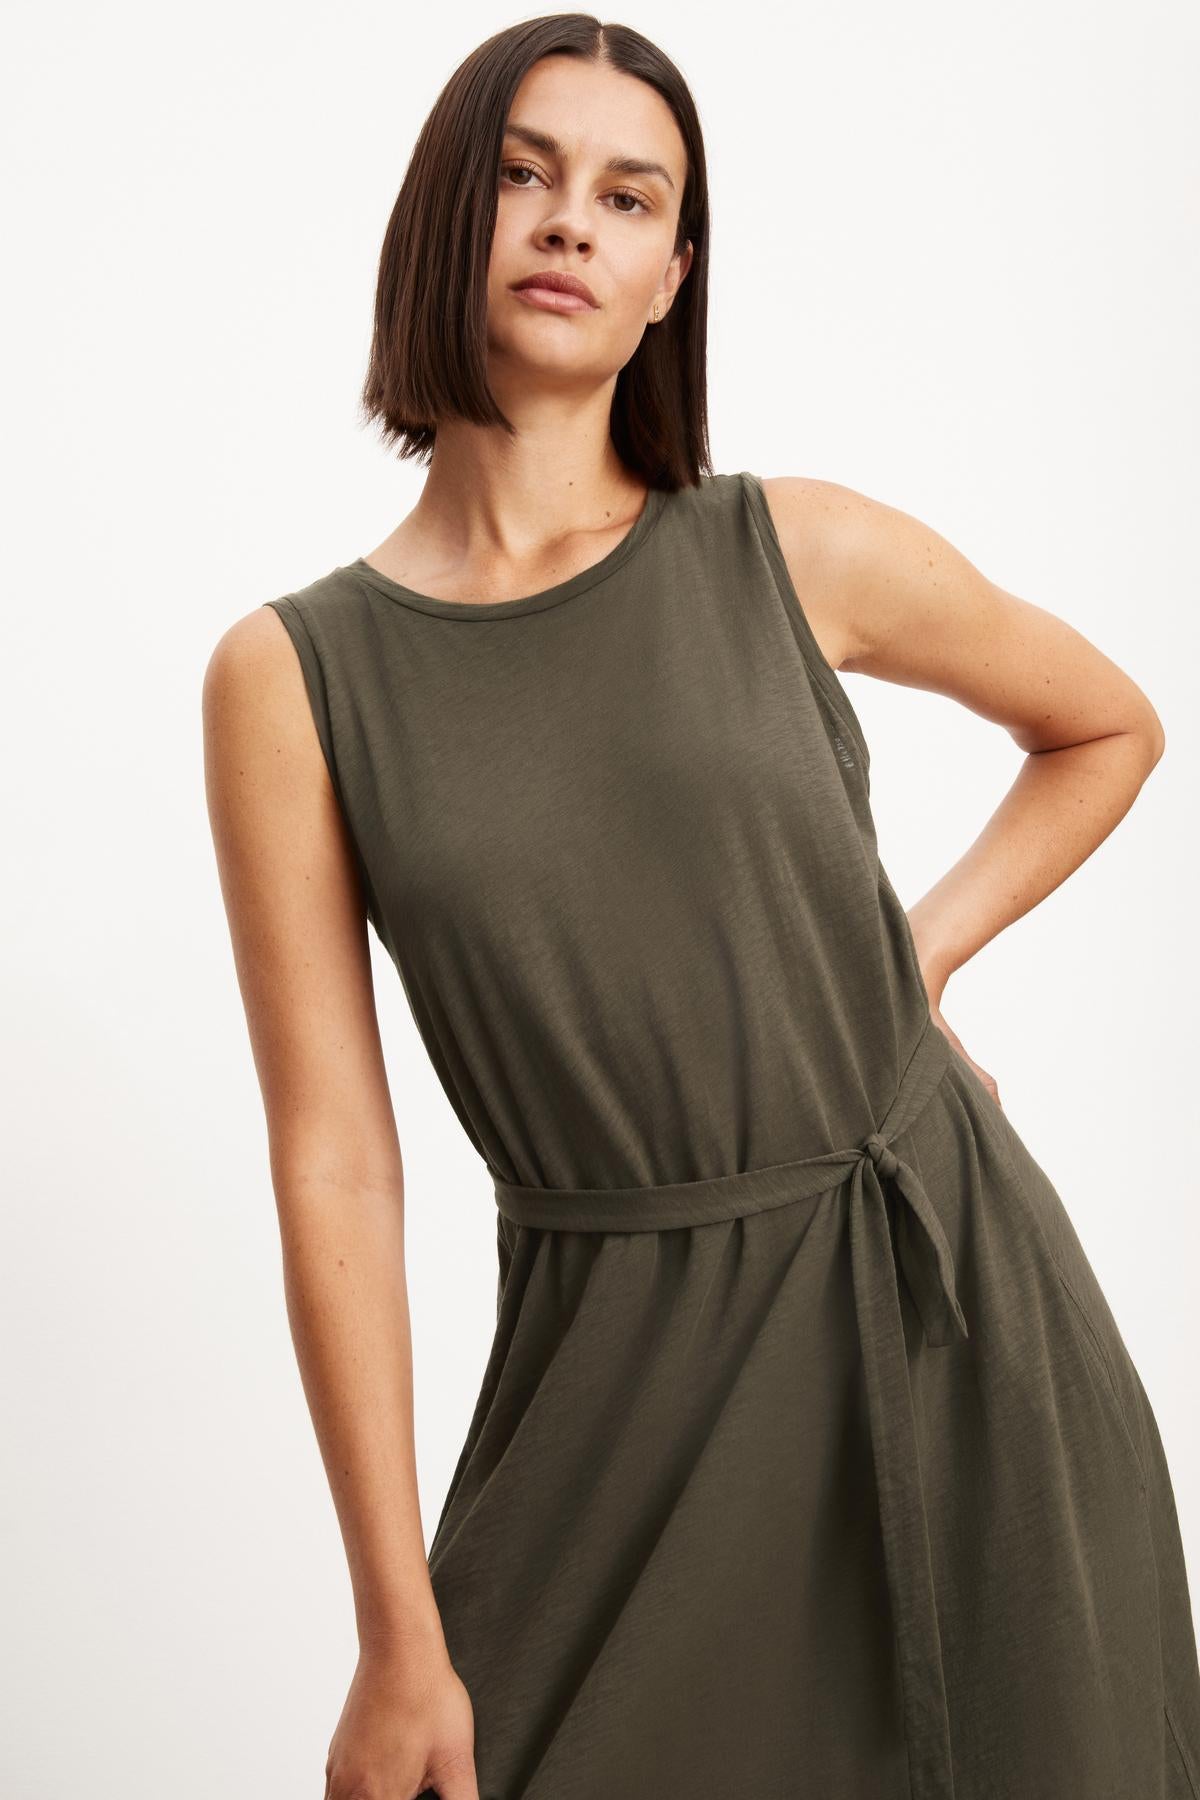 Women's Sleeveless A-Line Dress - Knox Rose Olive Green XS